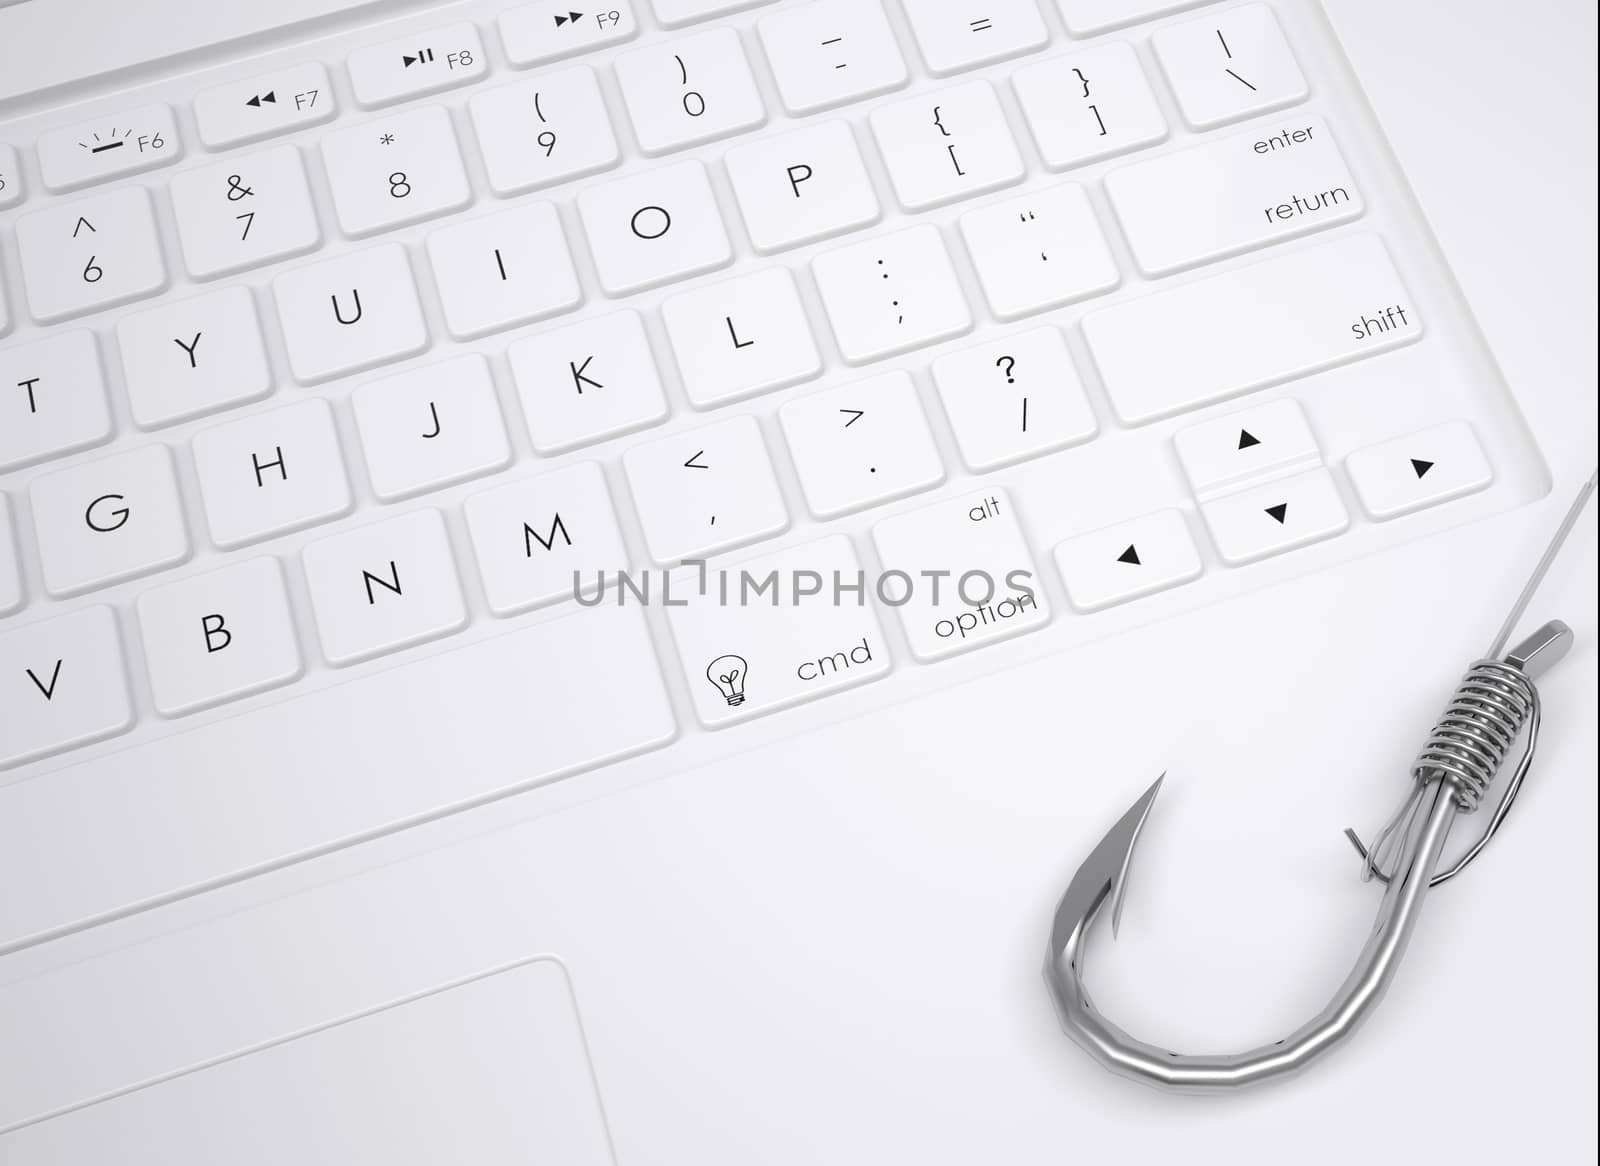 Fish hook on the keyboard by cherezoff